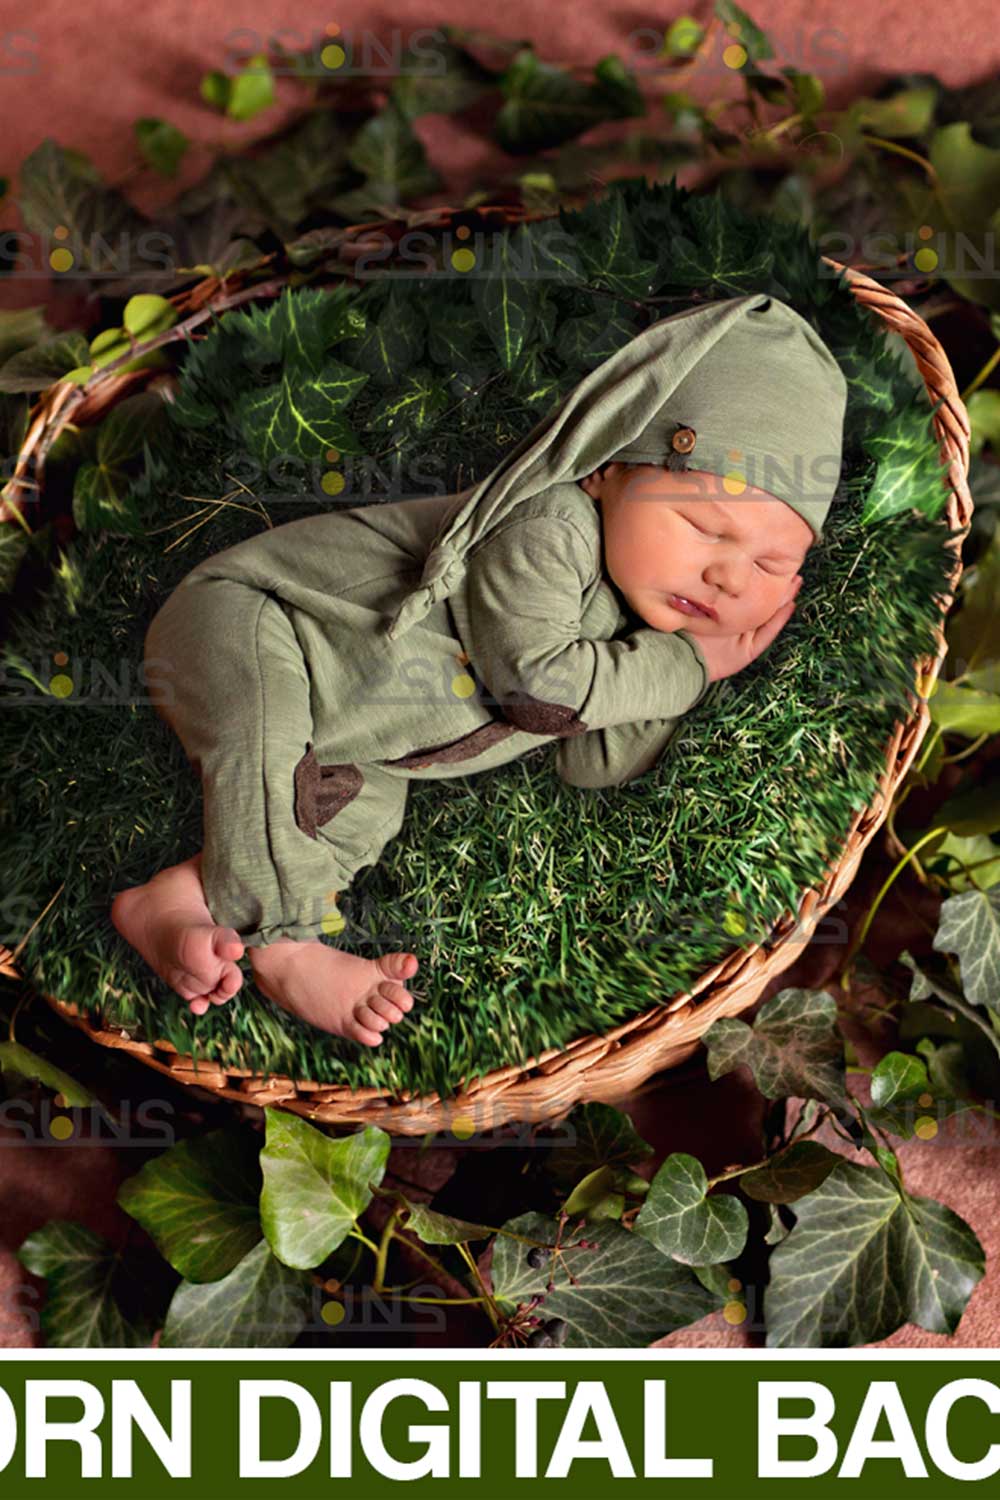 Newborn Digital Photo Backdrop Pinterest Image.